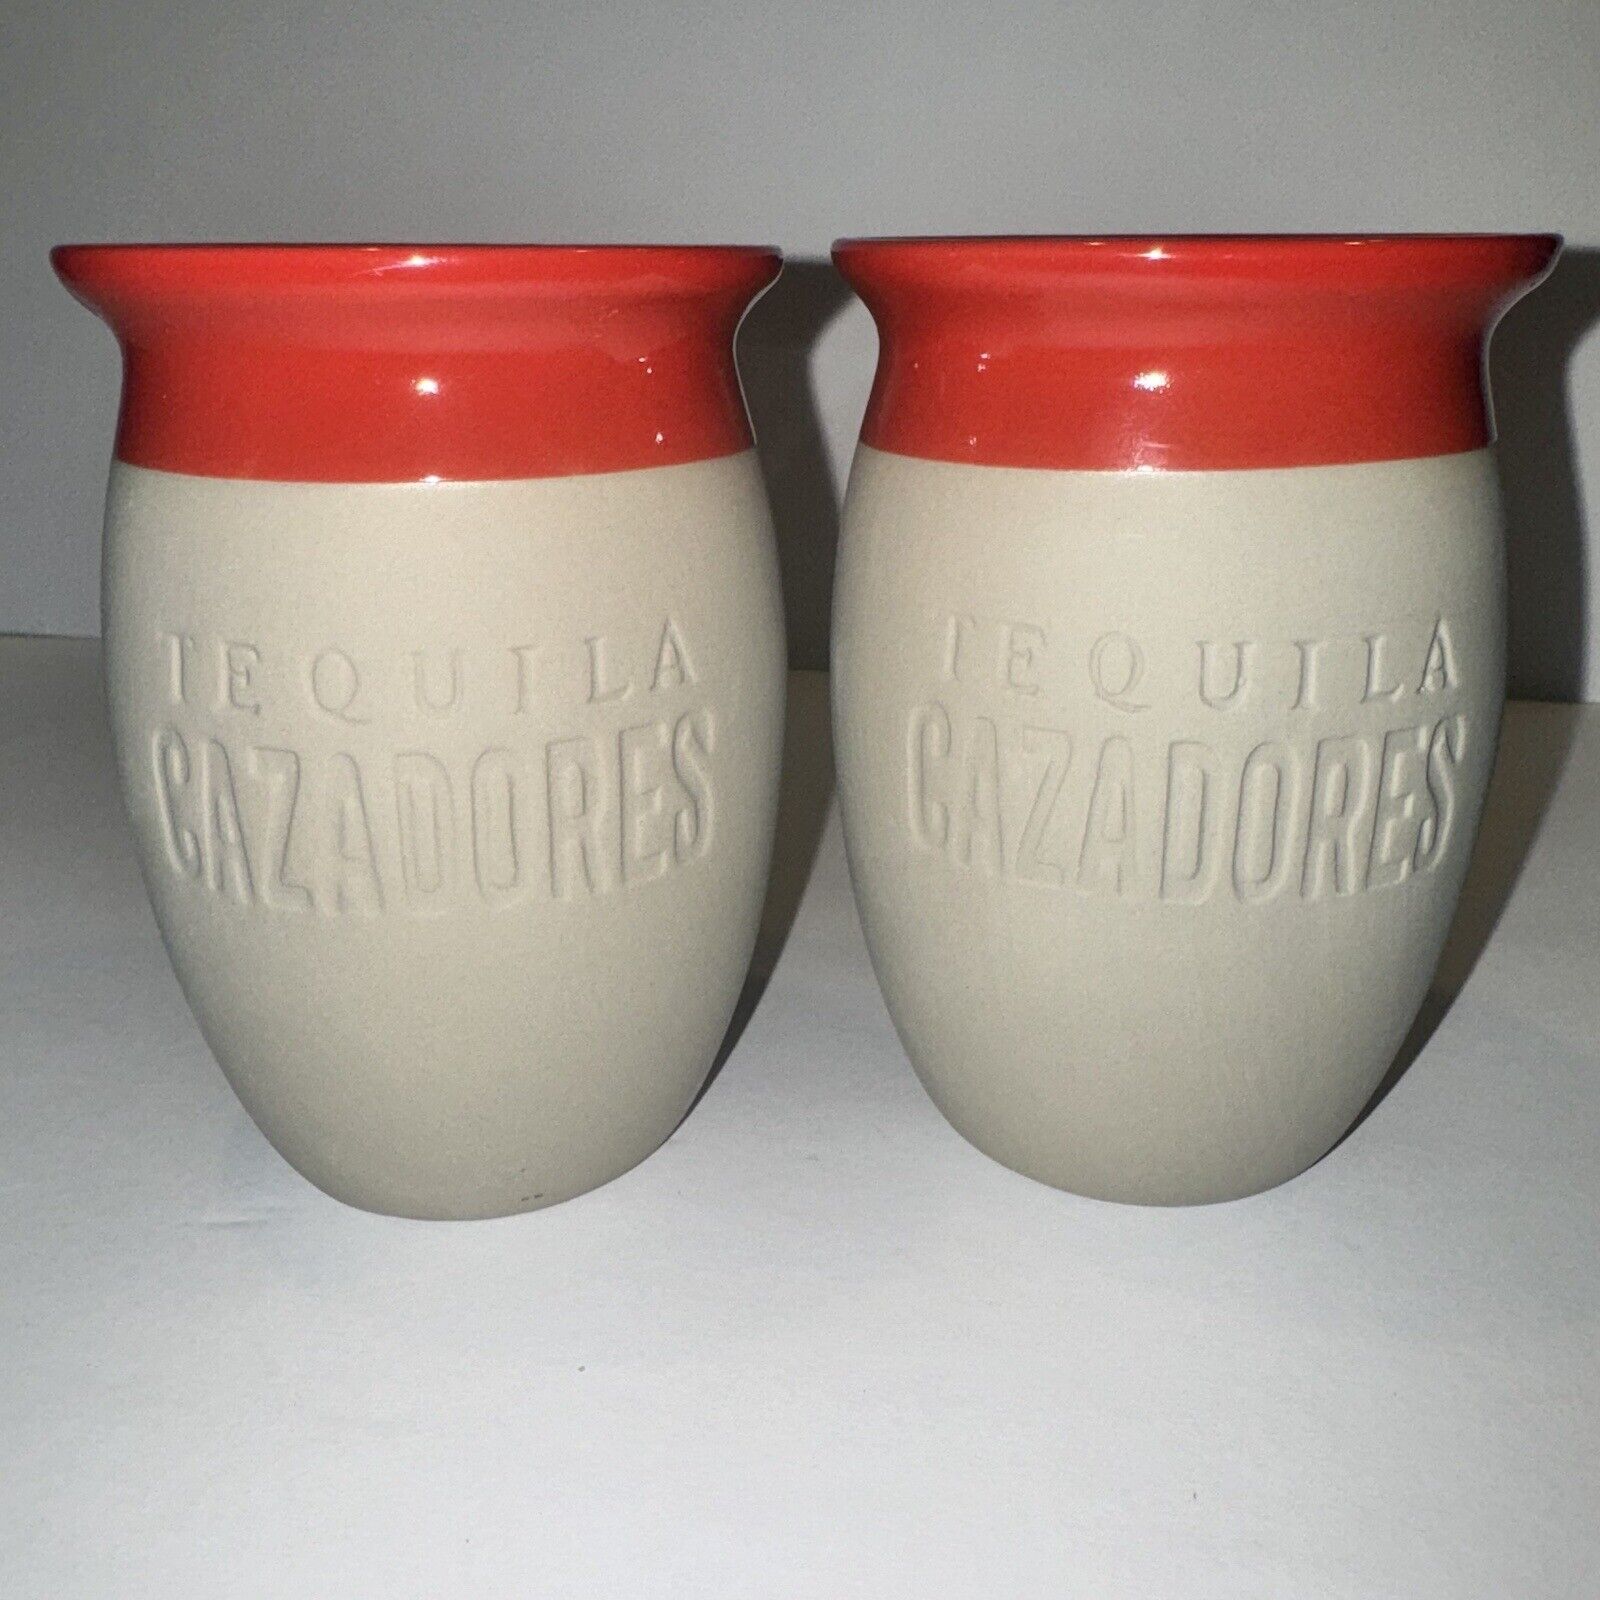 Tequila Cazadores The Cantarito Mexican Pottery Jug Mug 16 Oz Pair Of 2 Or More